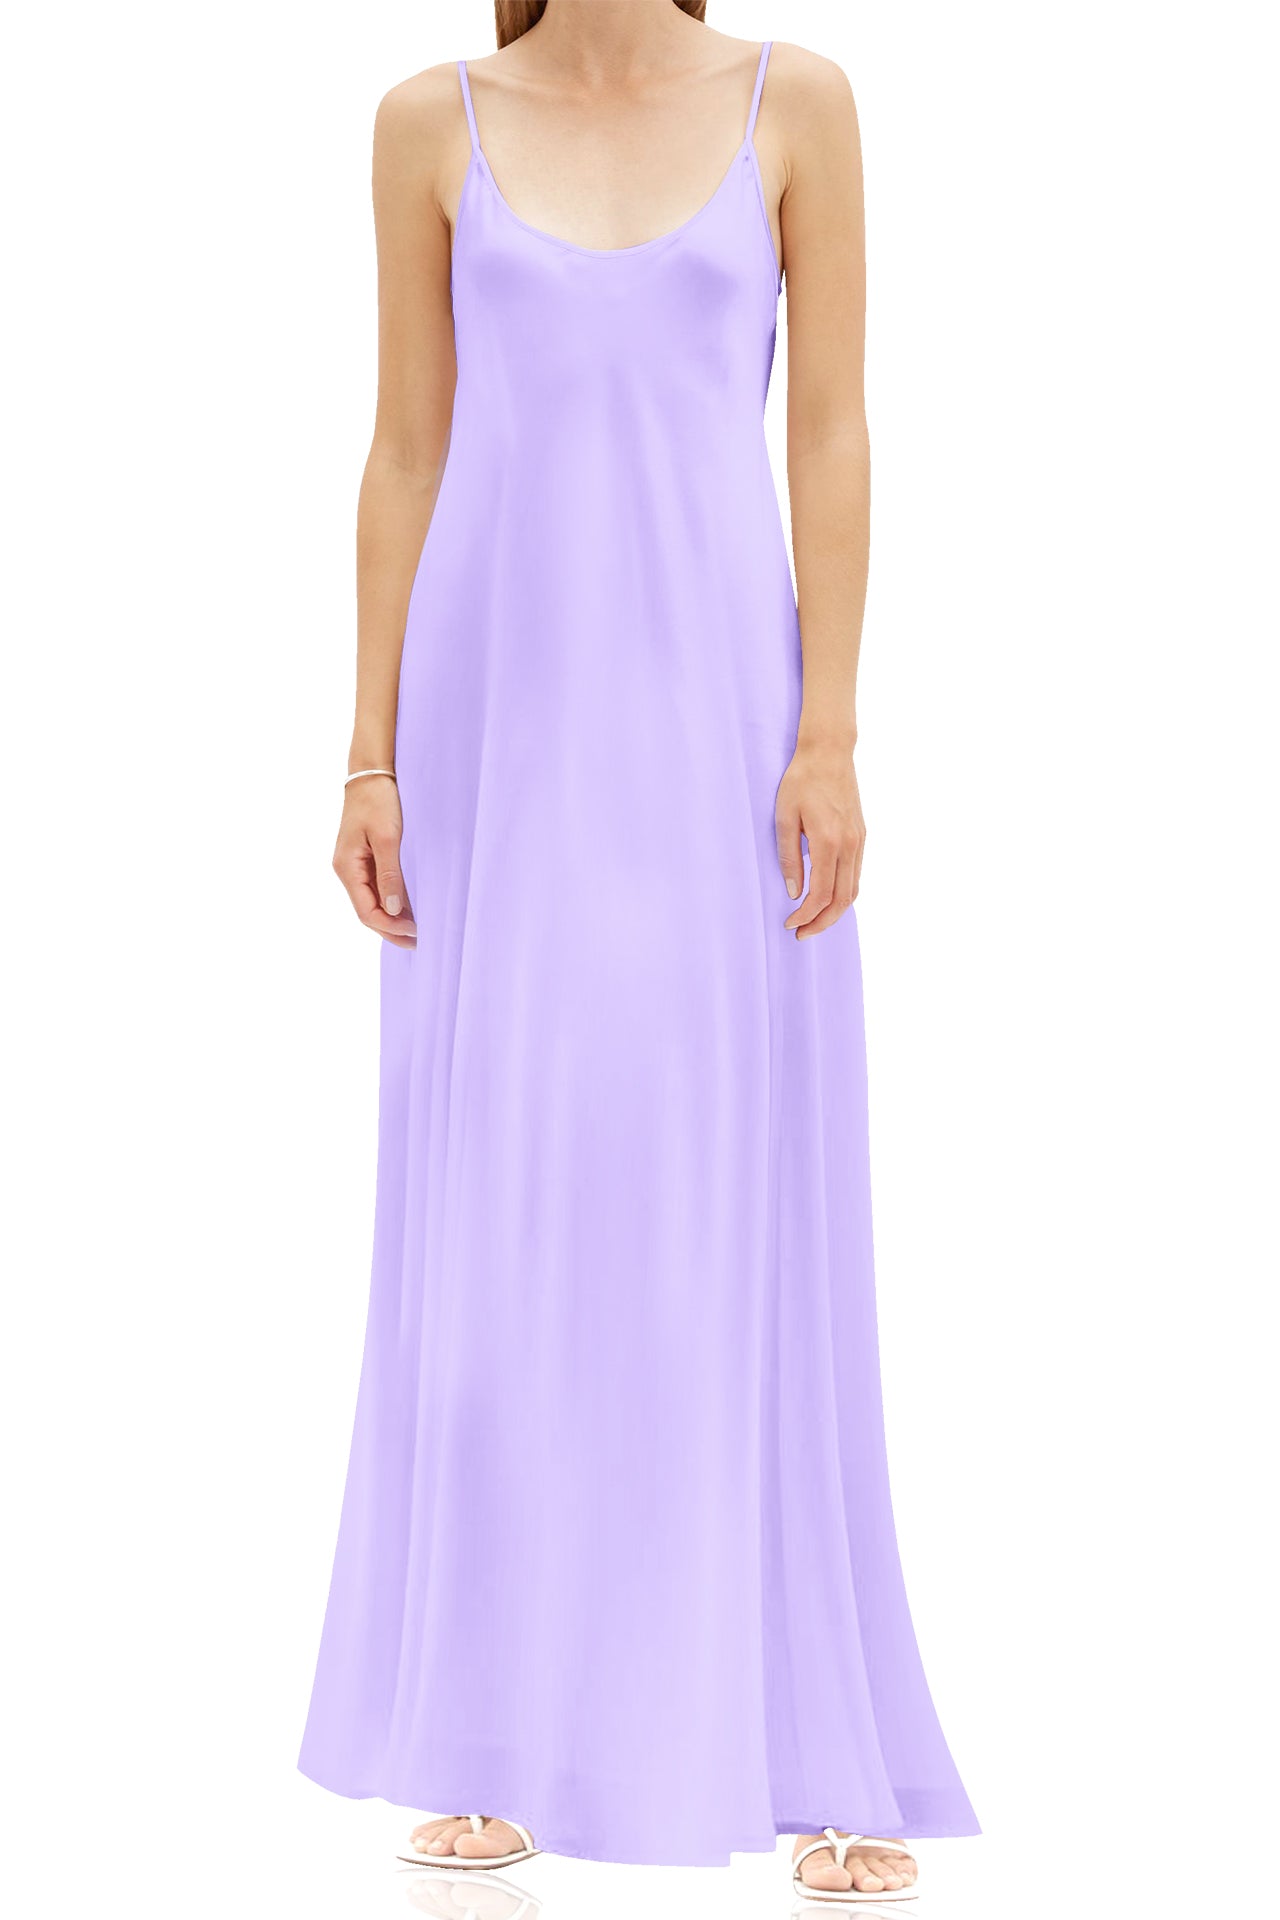 "slip dress purple" "full length slip dress" "Kyle X Shahida" "cami maxi dress"